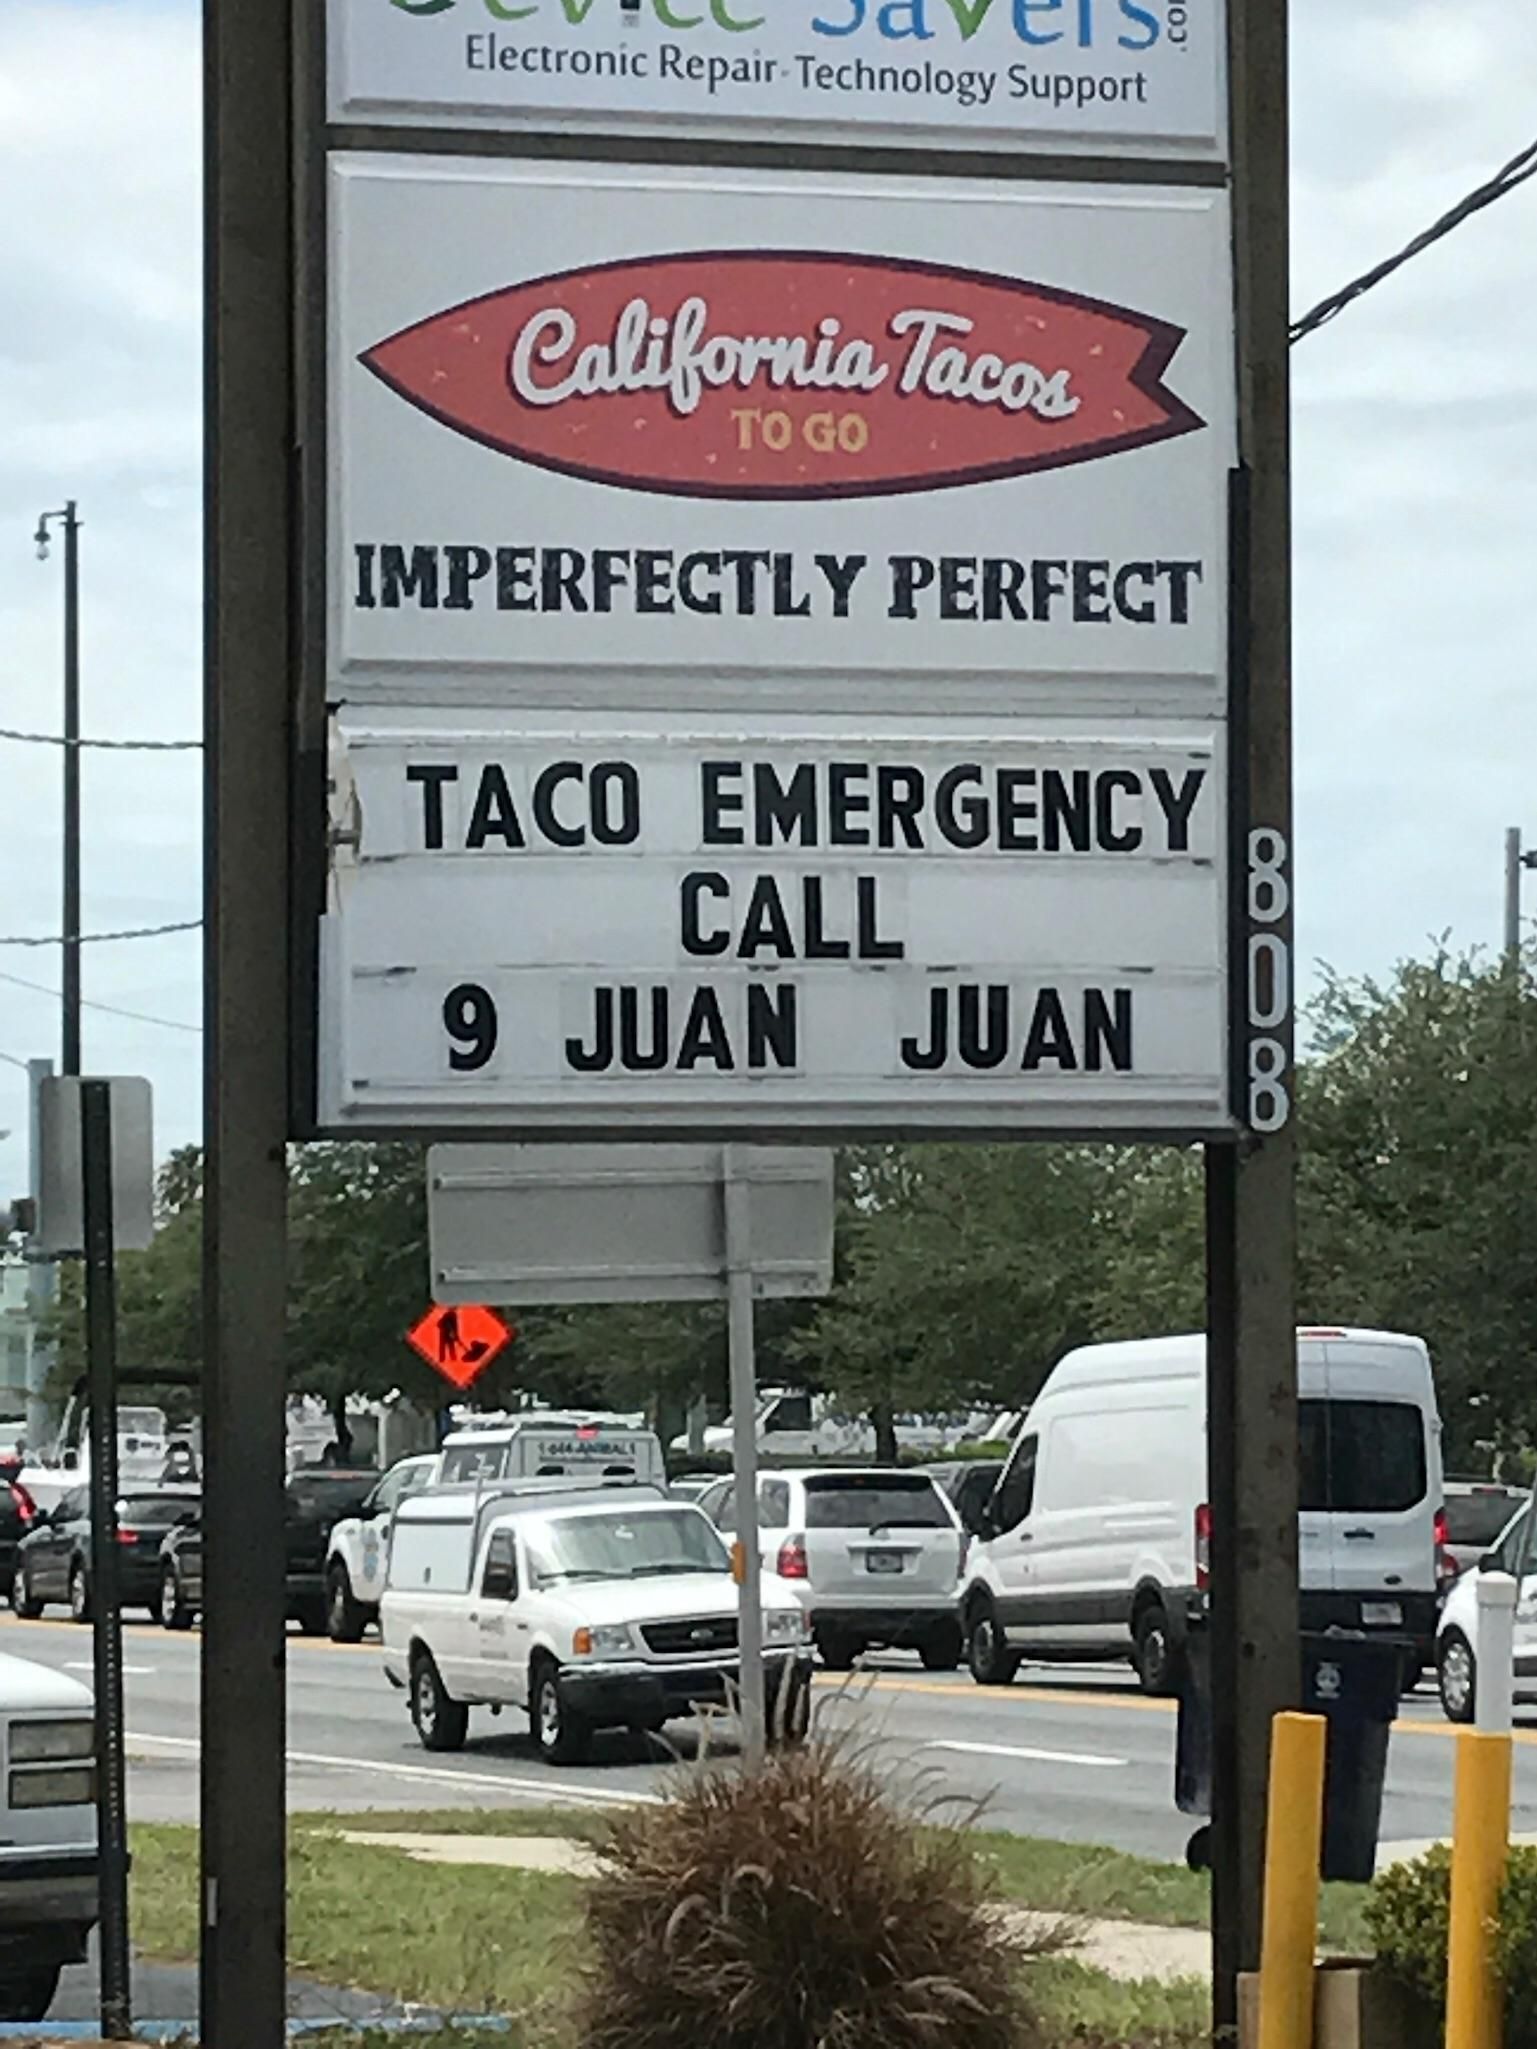 Taco Emergency?